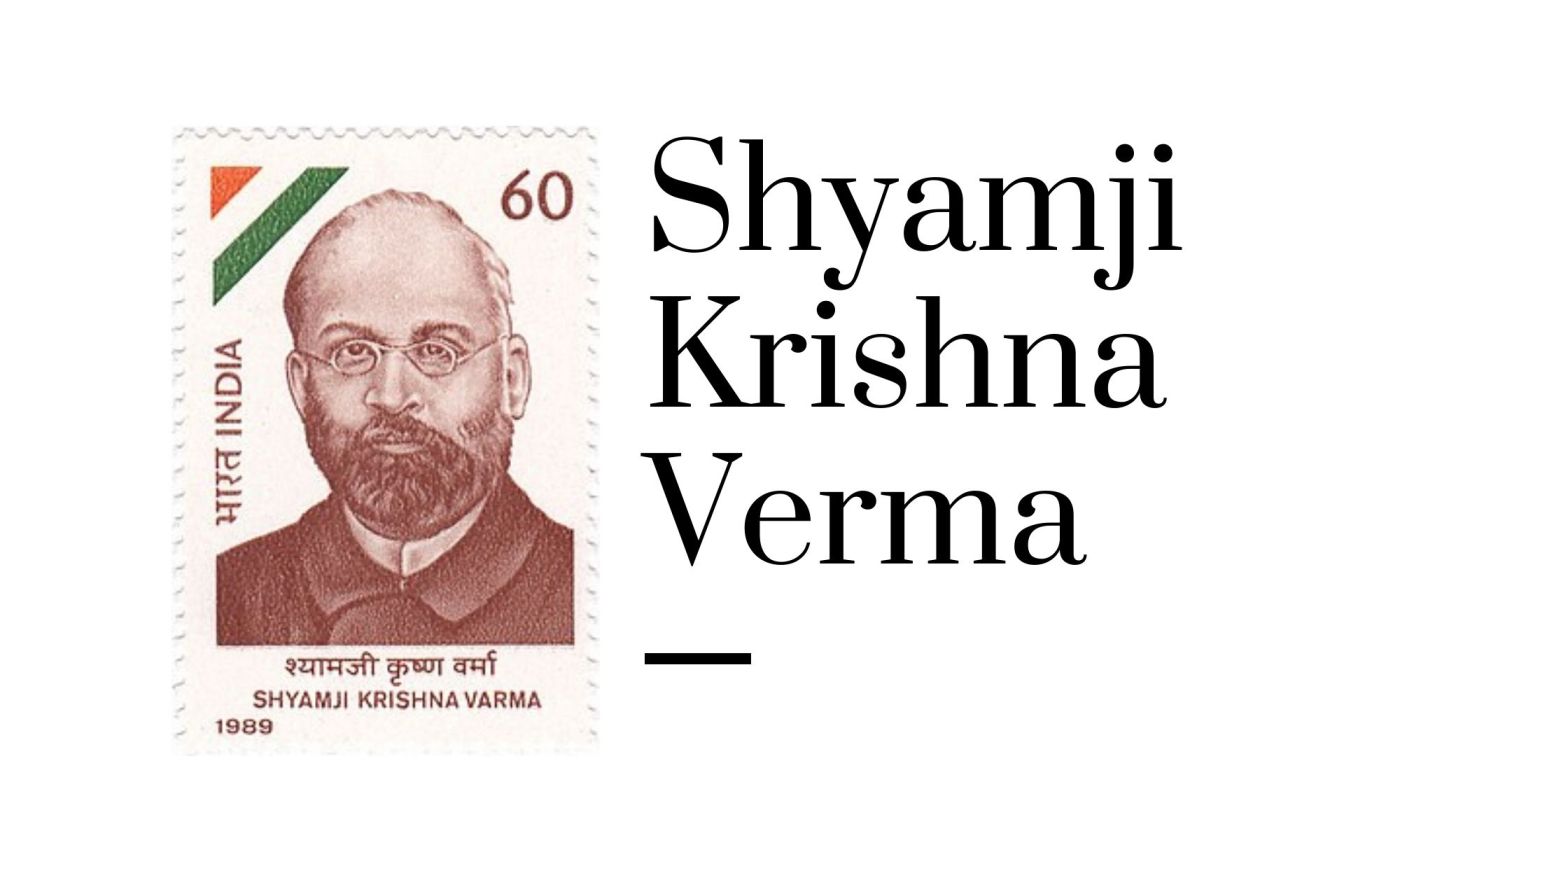 Shyamji Krishna Verma: Biography, Images, Contribution